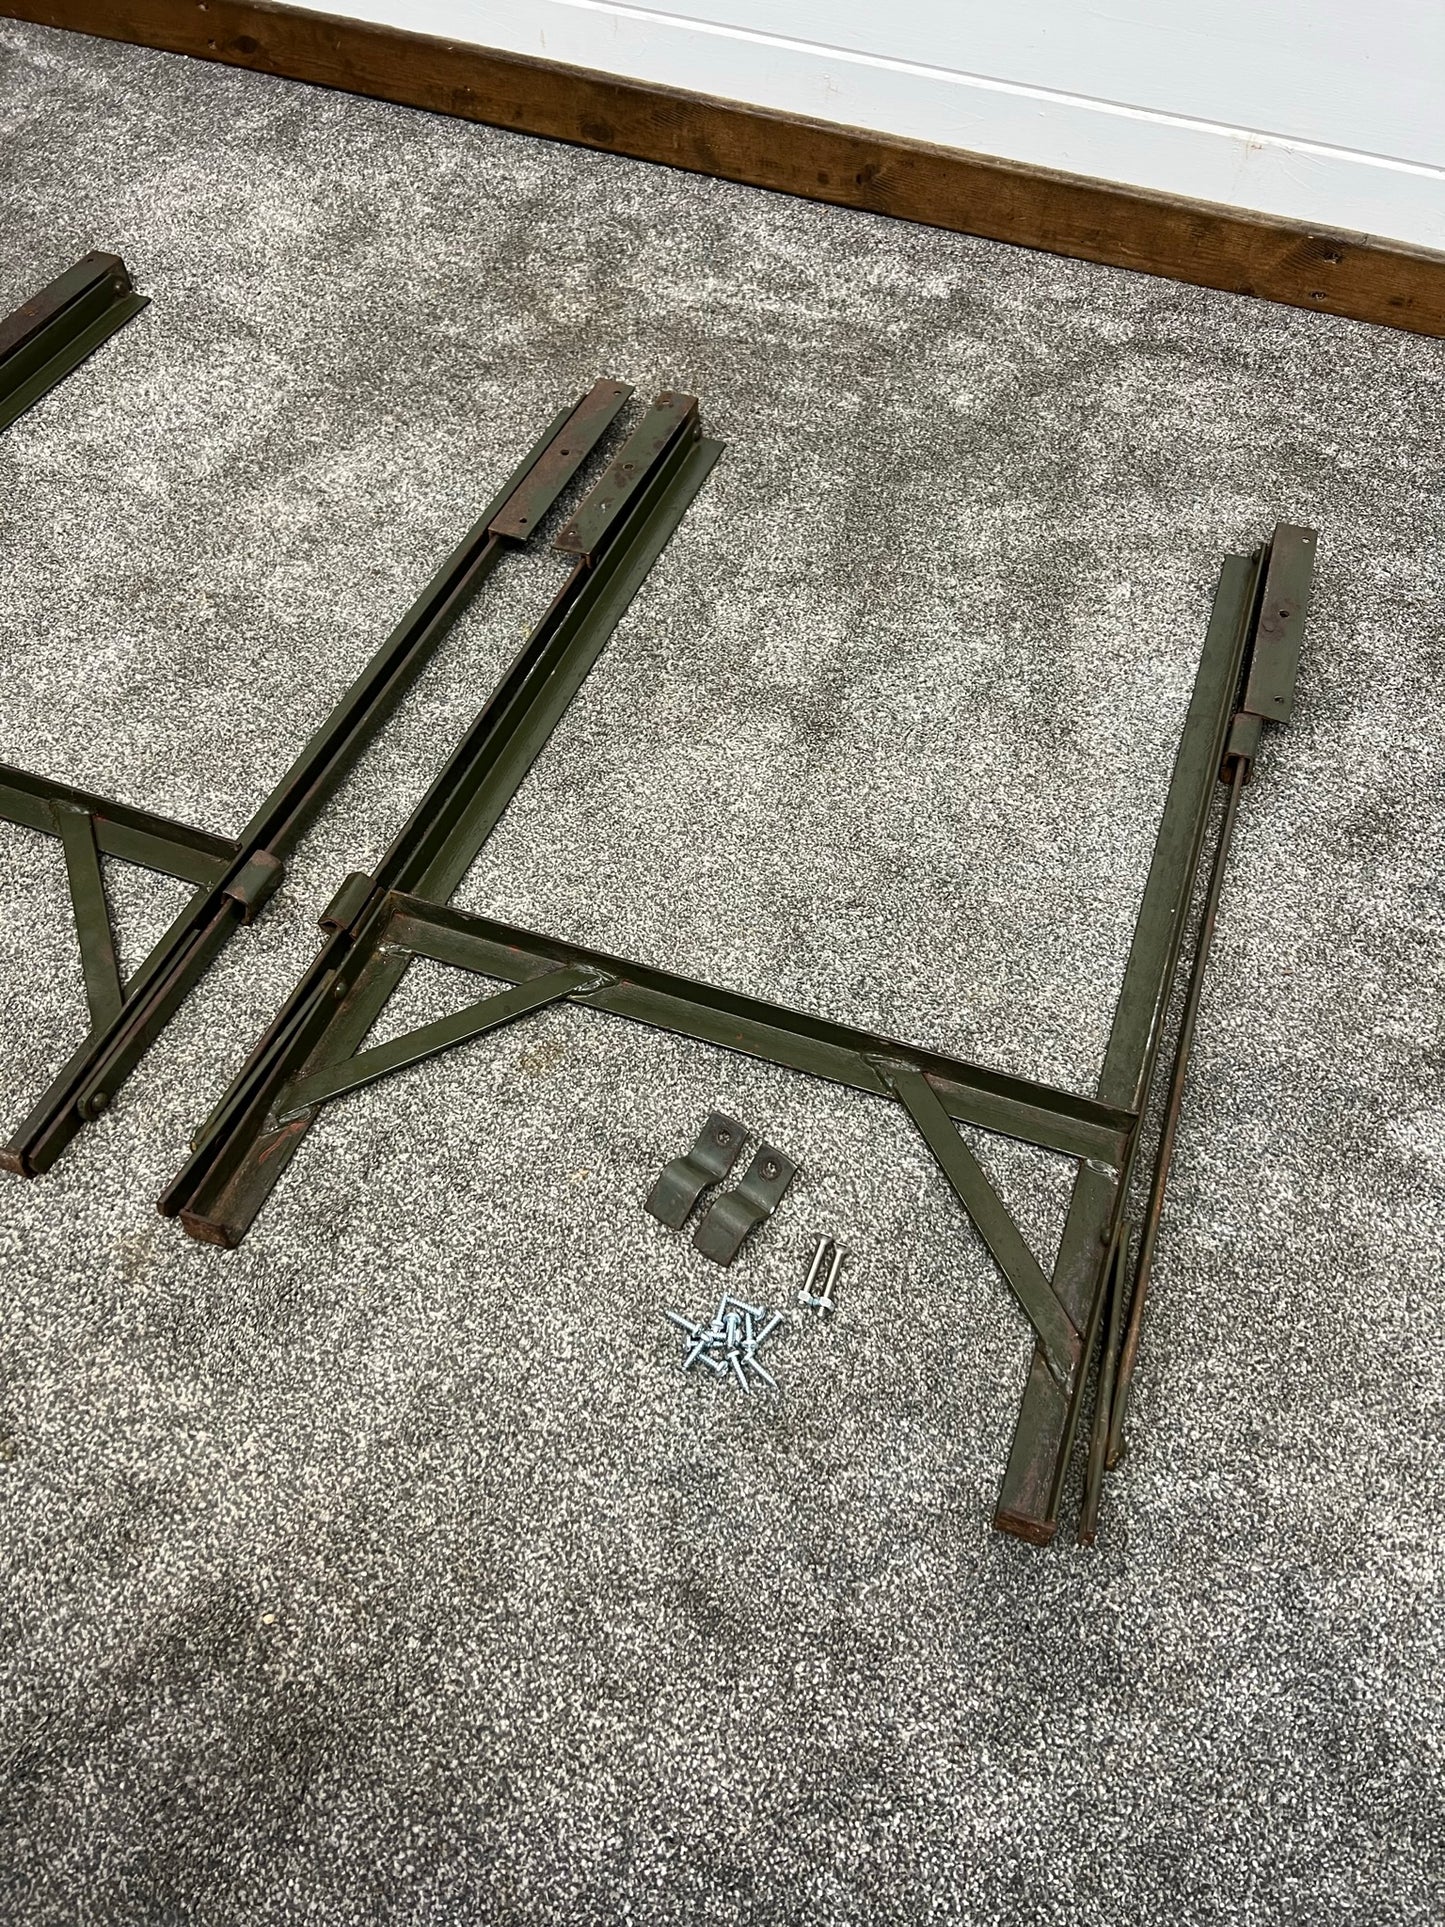 Metal Trestle Table Folding Legs Heavy Duty Reclaimed Industrial Rustic Furniture Table Legs